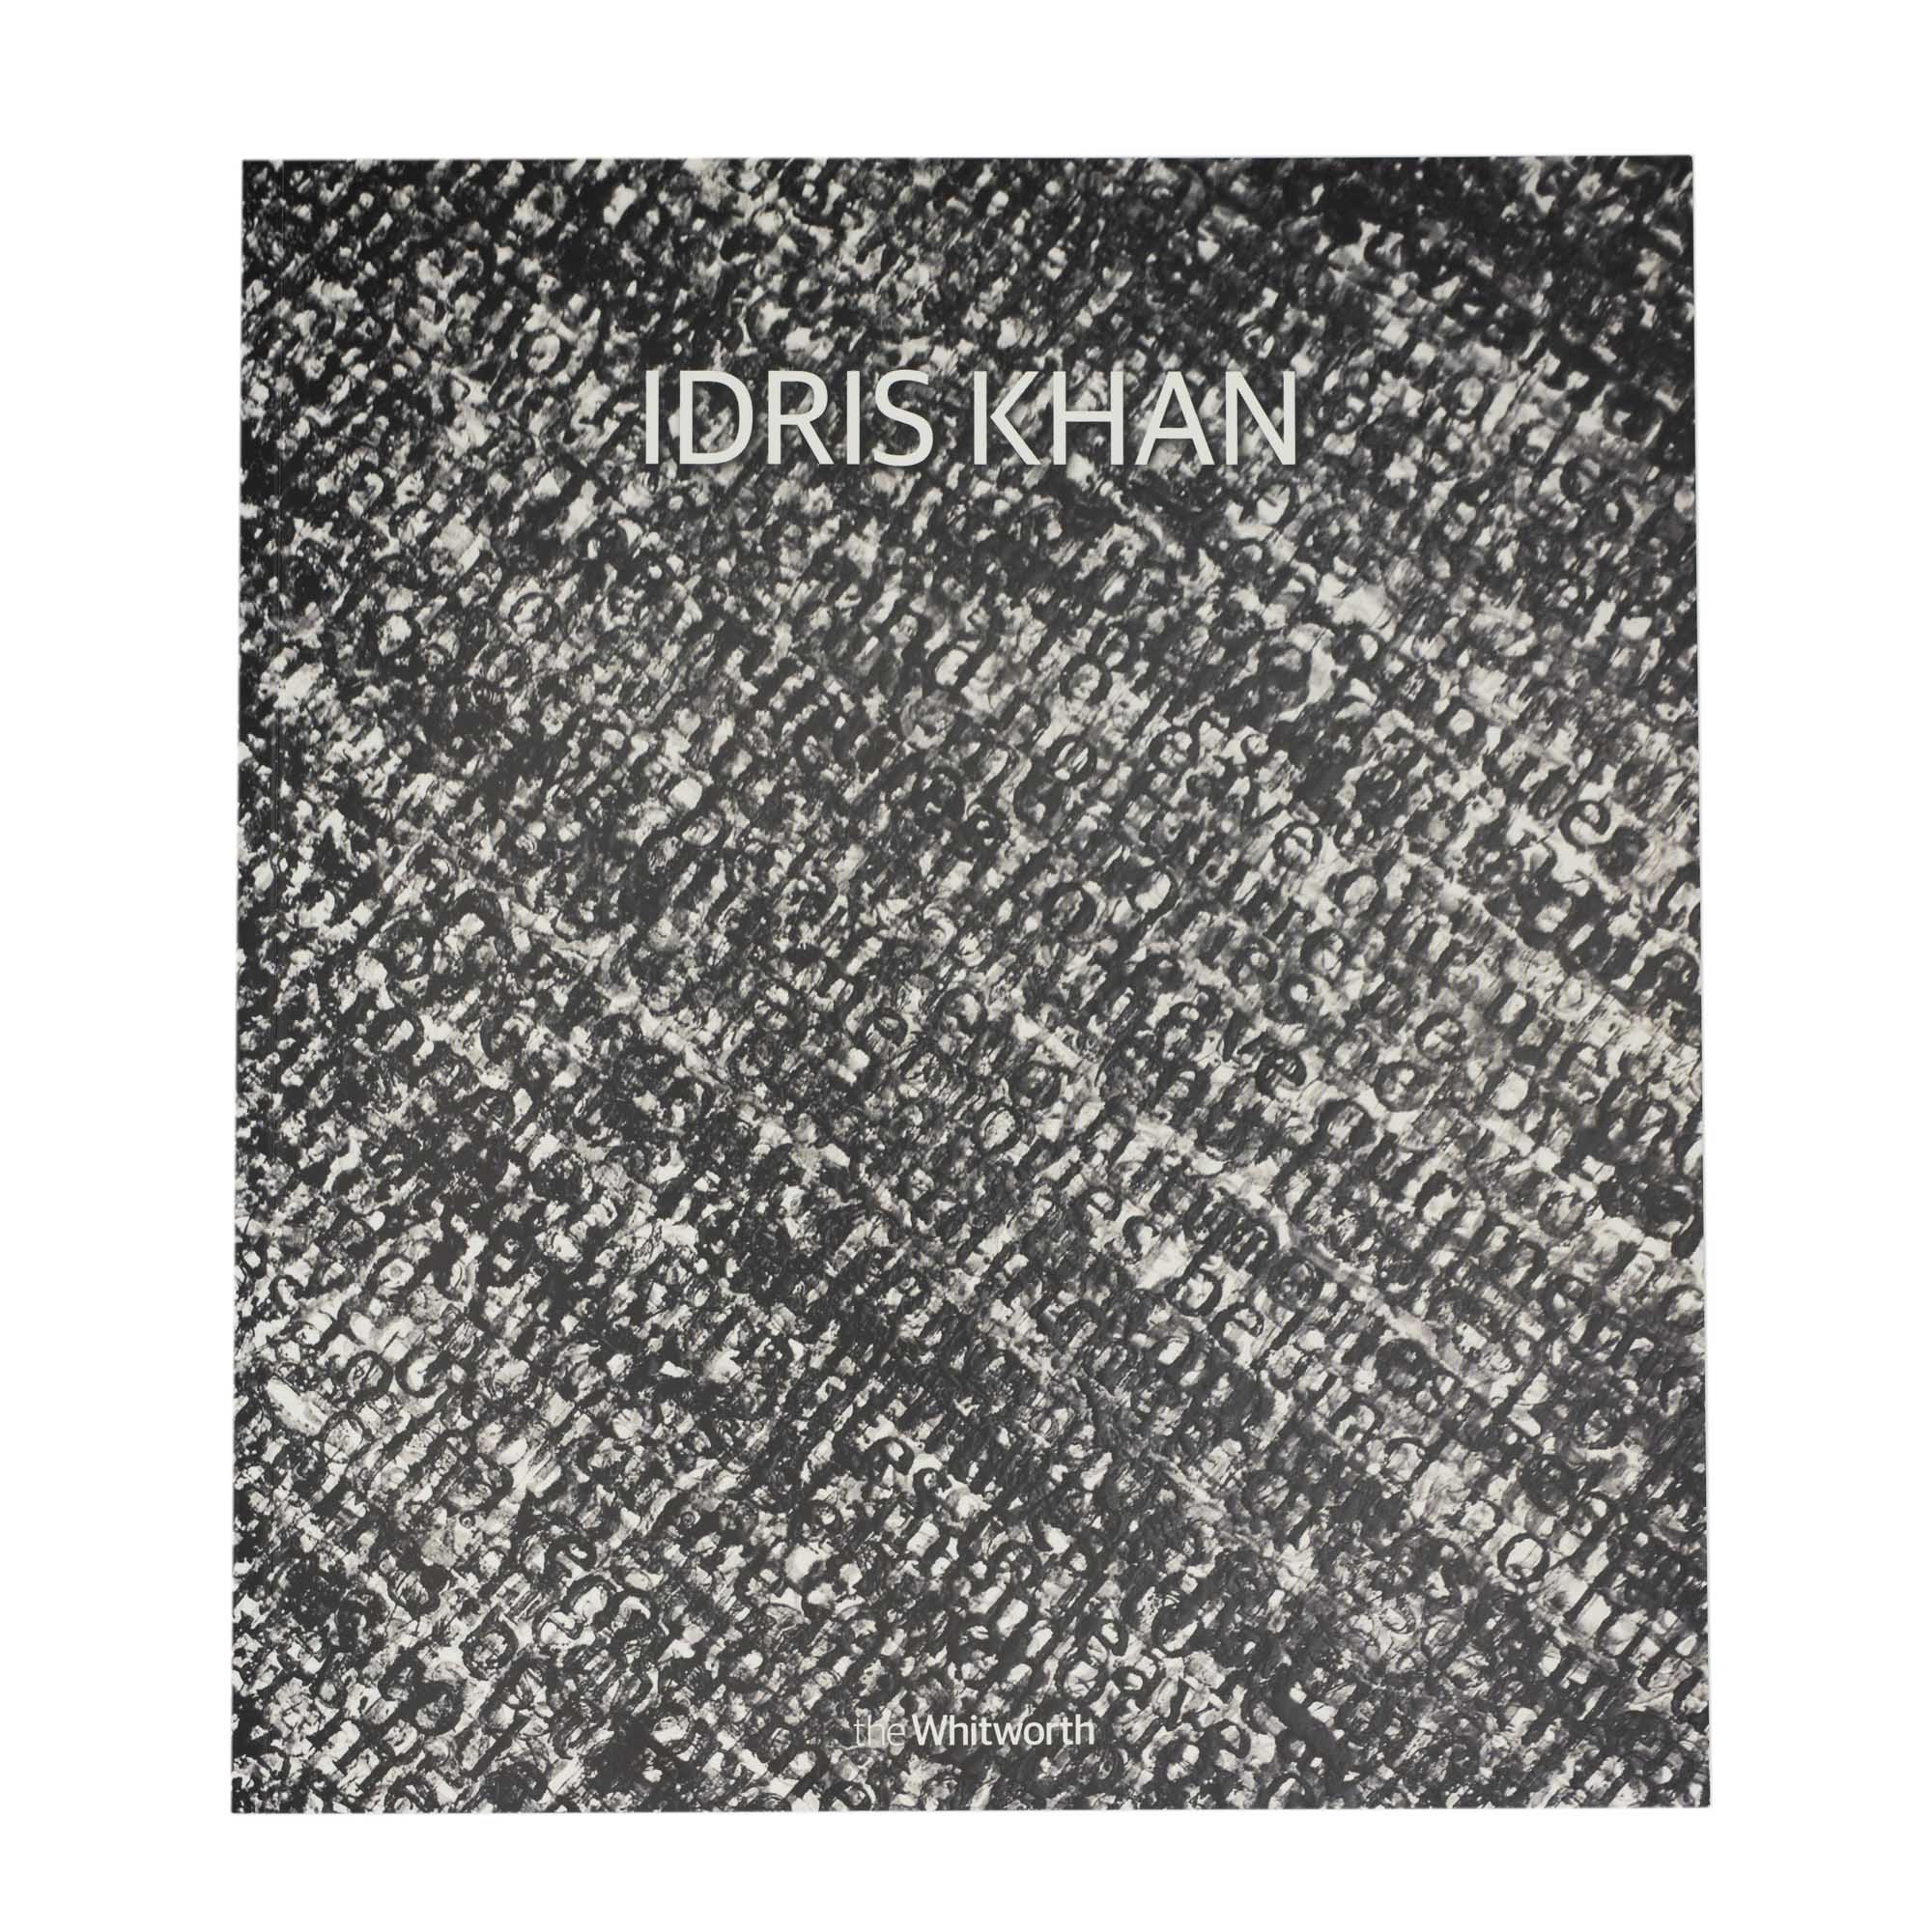 Idris Khan Exhibition Catalogue